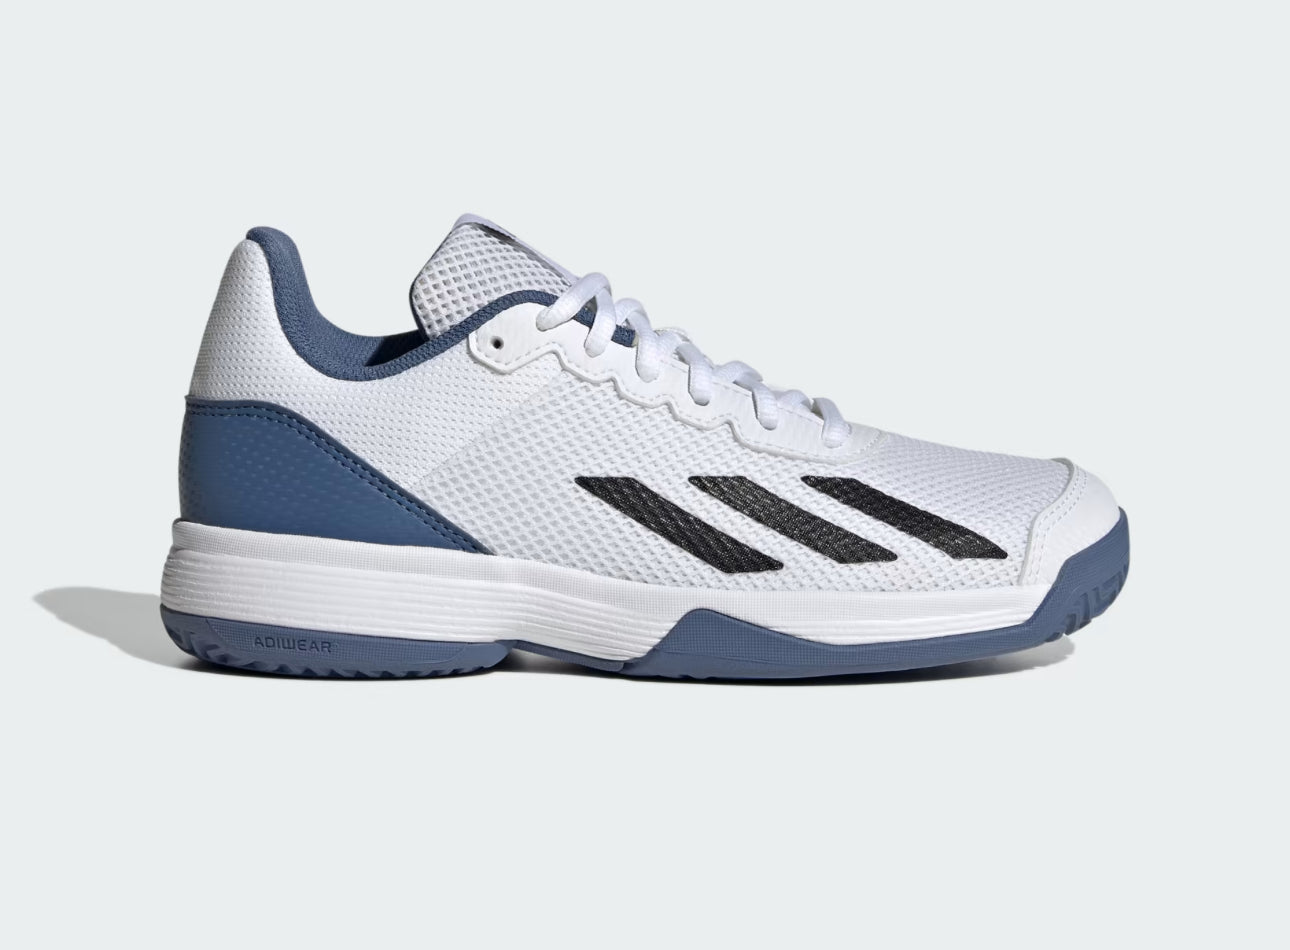 Junior Adidas Courtflash K Shoe